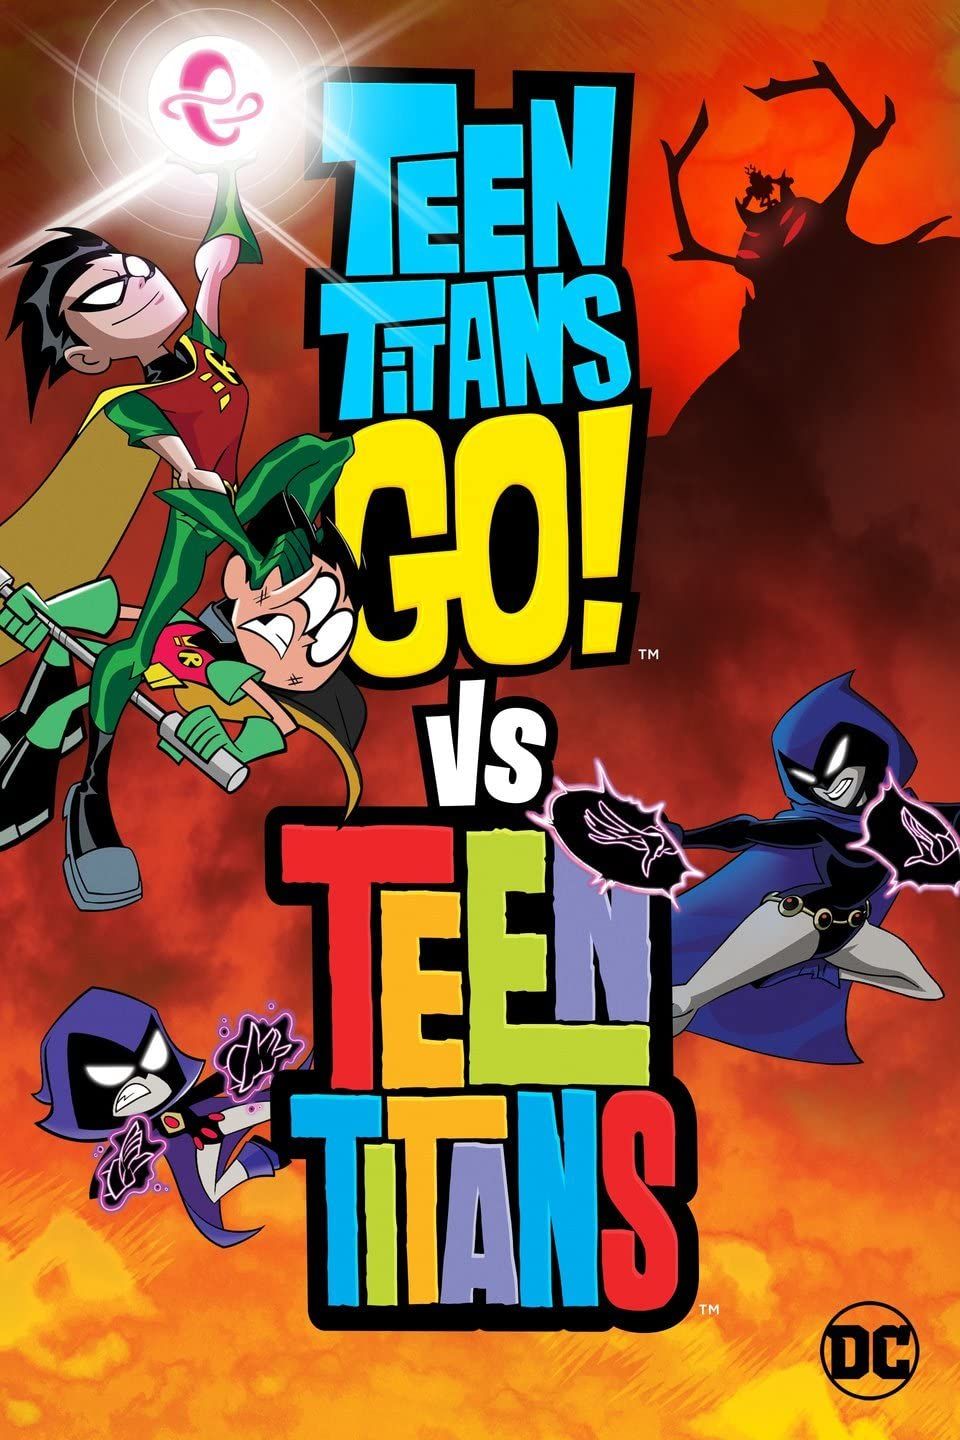 Teen Titans Go Vs Teen Titans (2019) Hindi Dubbed BluRay download full movie